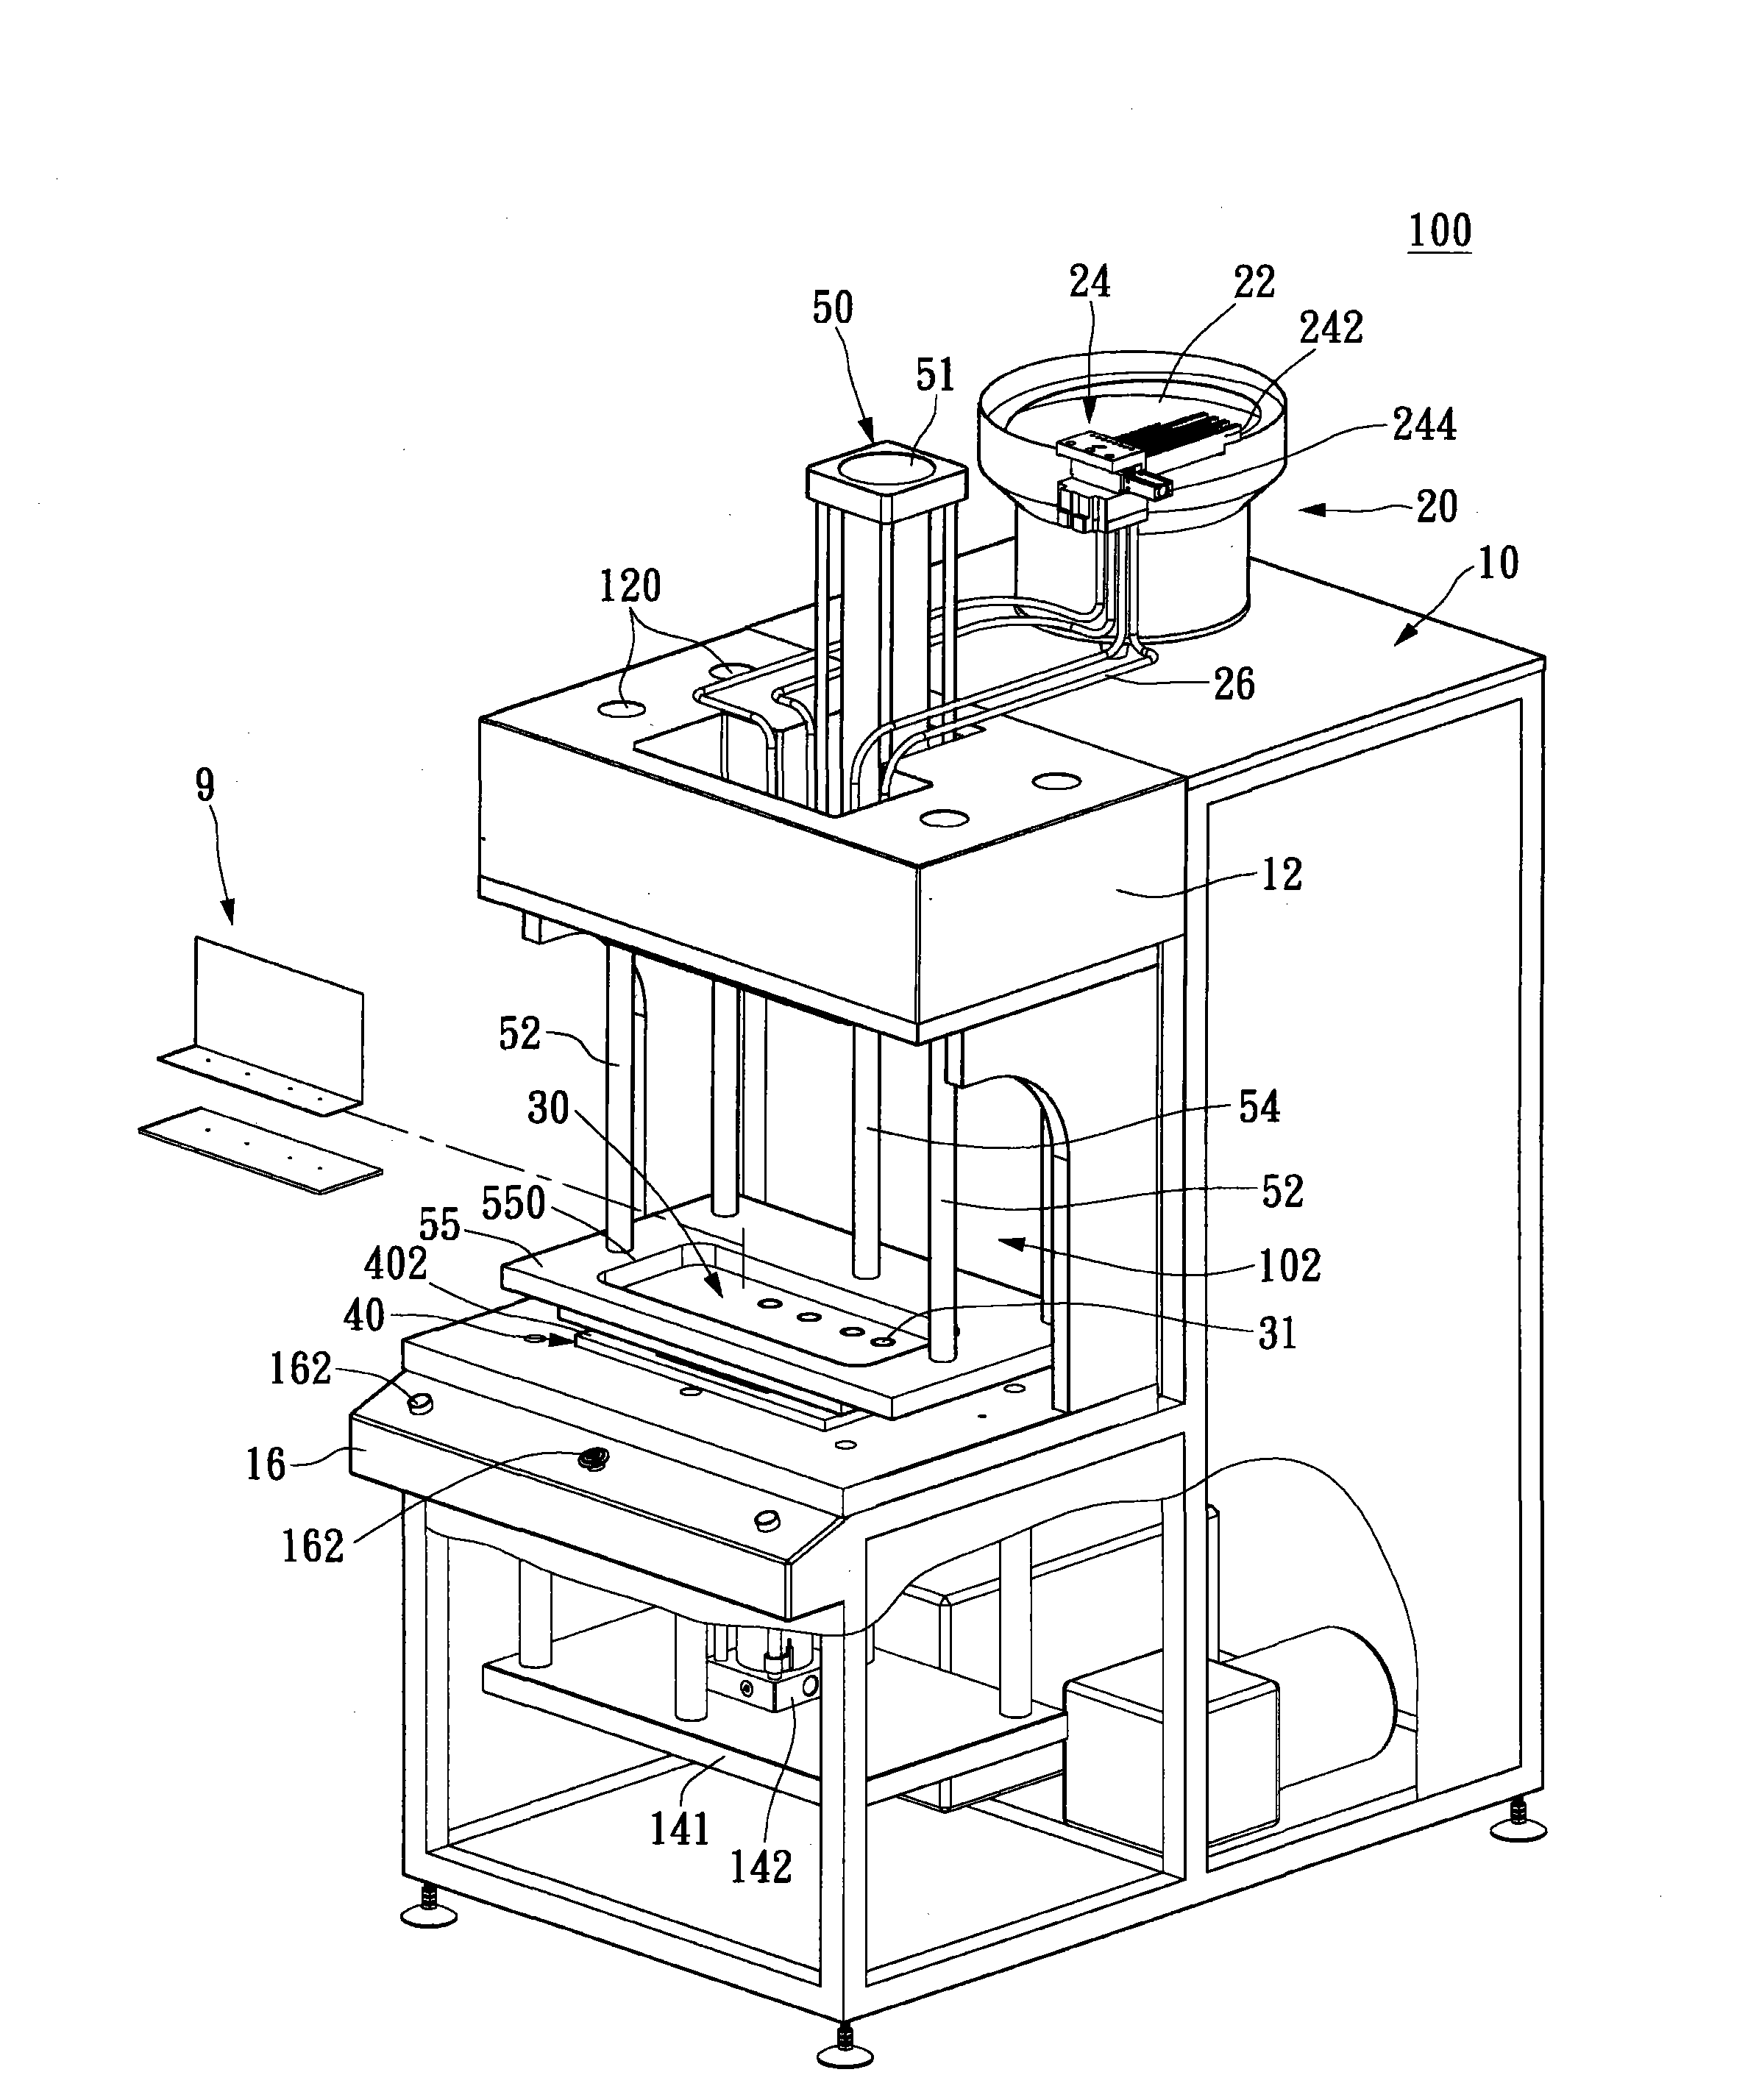 Automatic loading and setting blind rivet mechanism